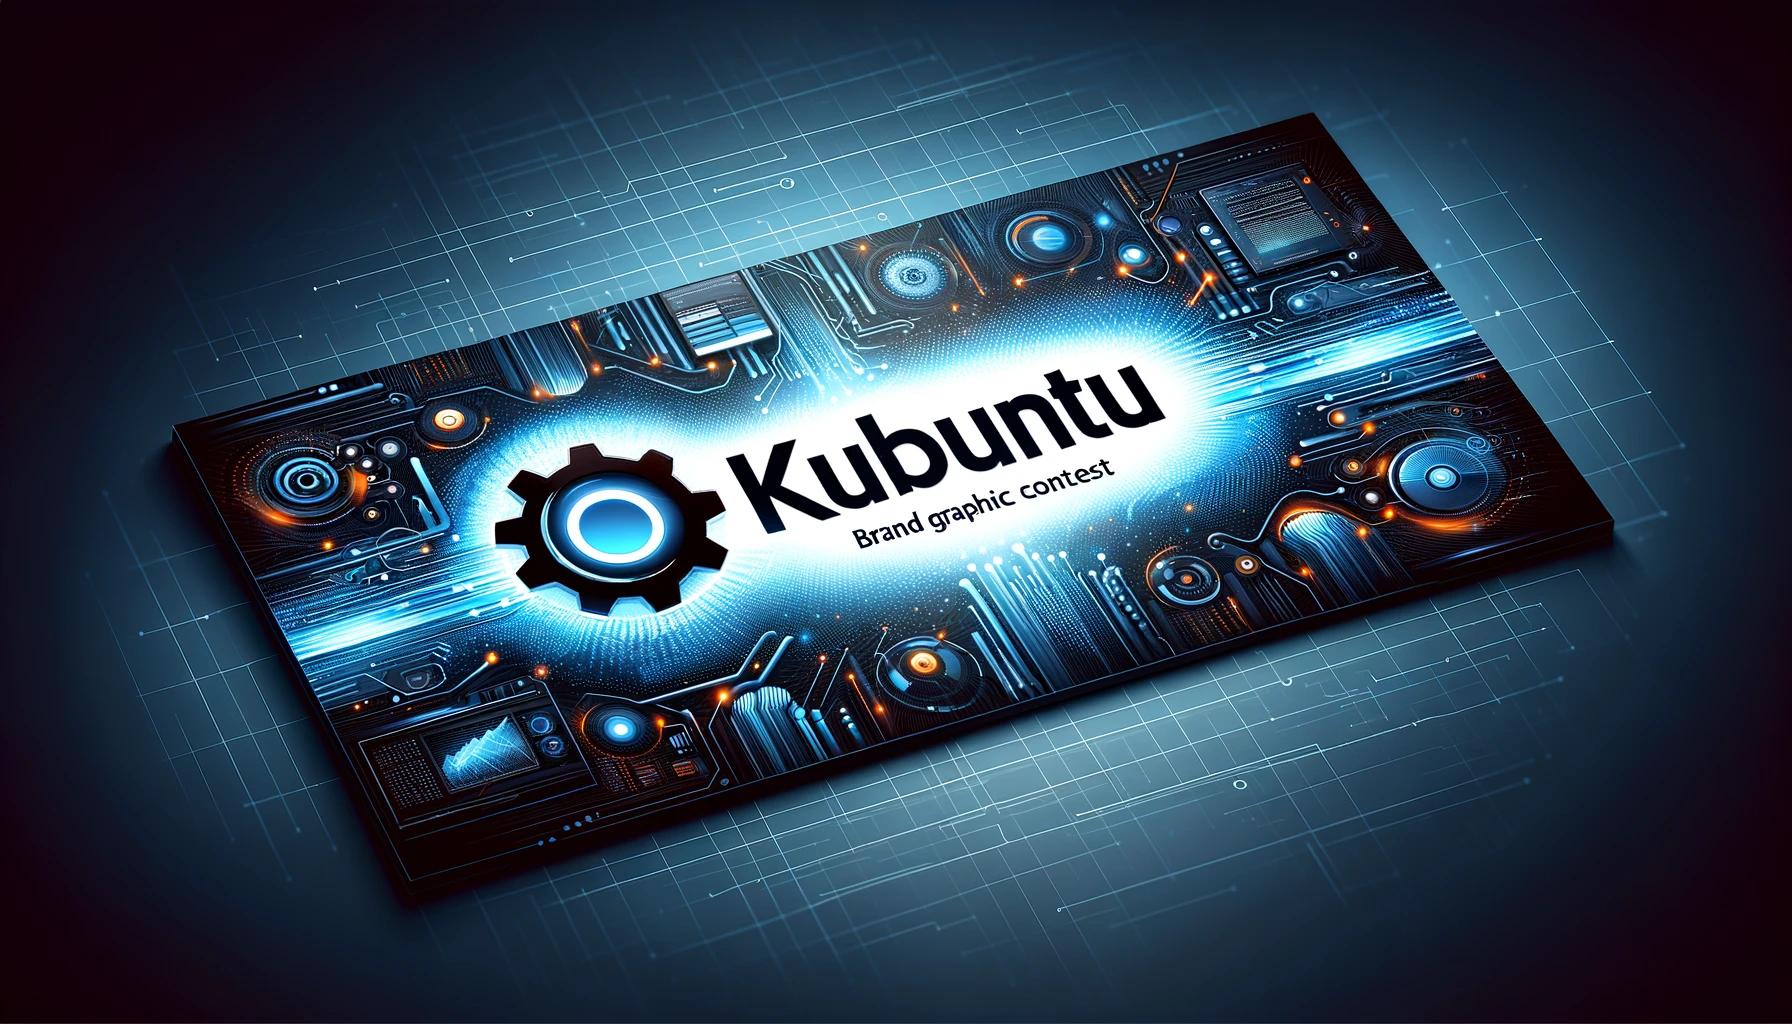 Help Shape the Future of Kubuntu and Win Awesome Prizes